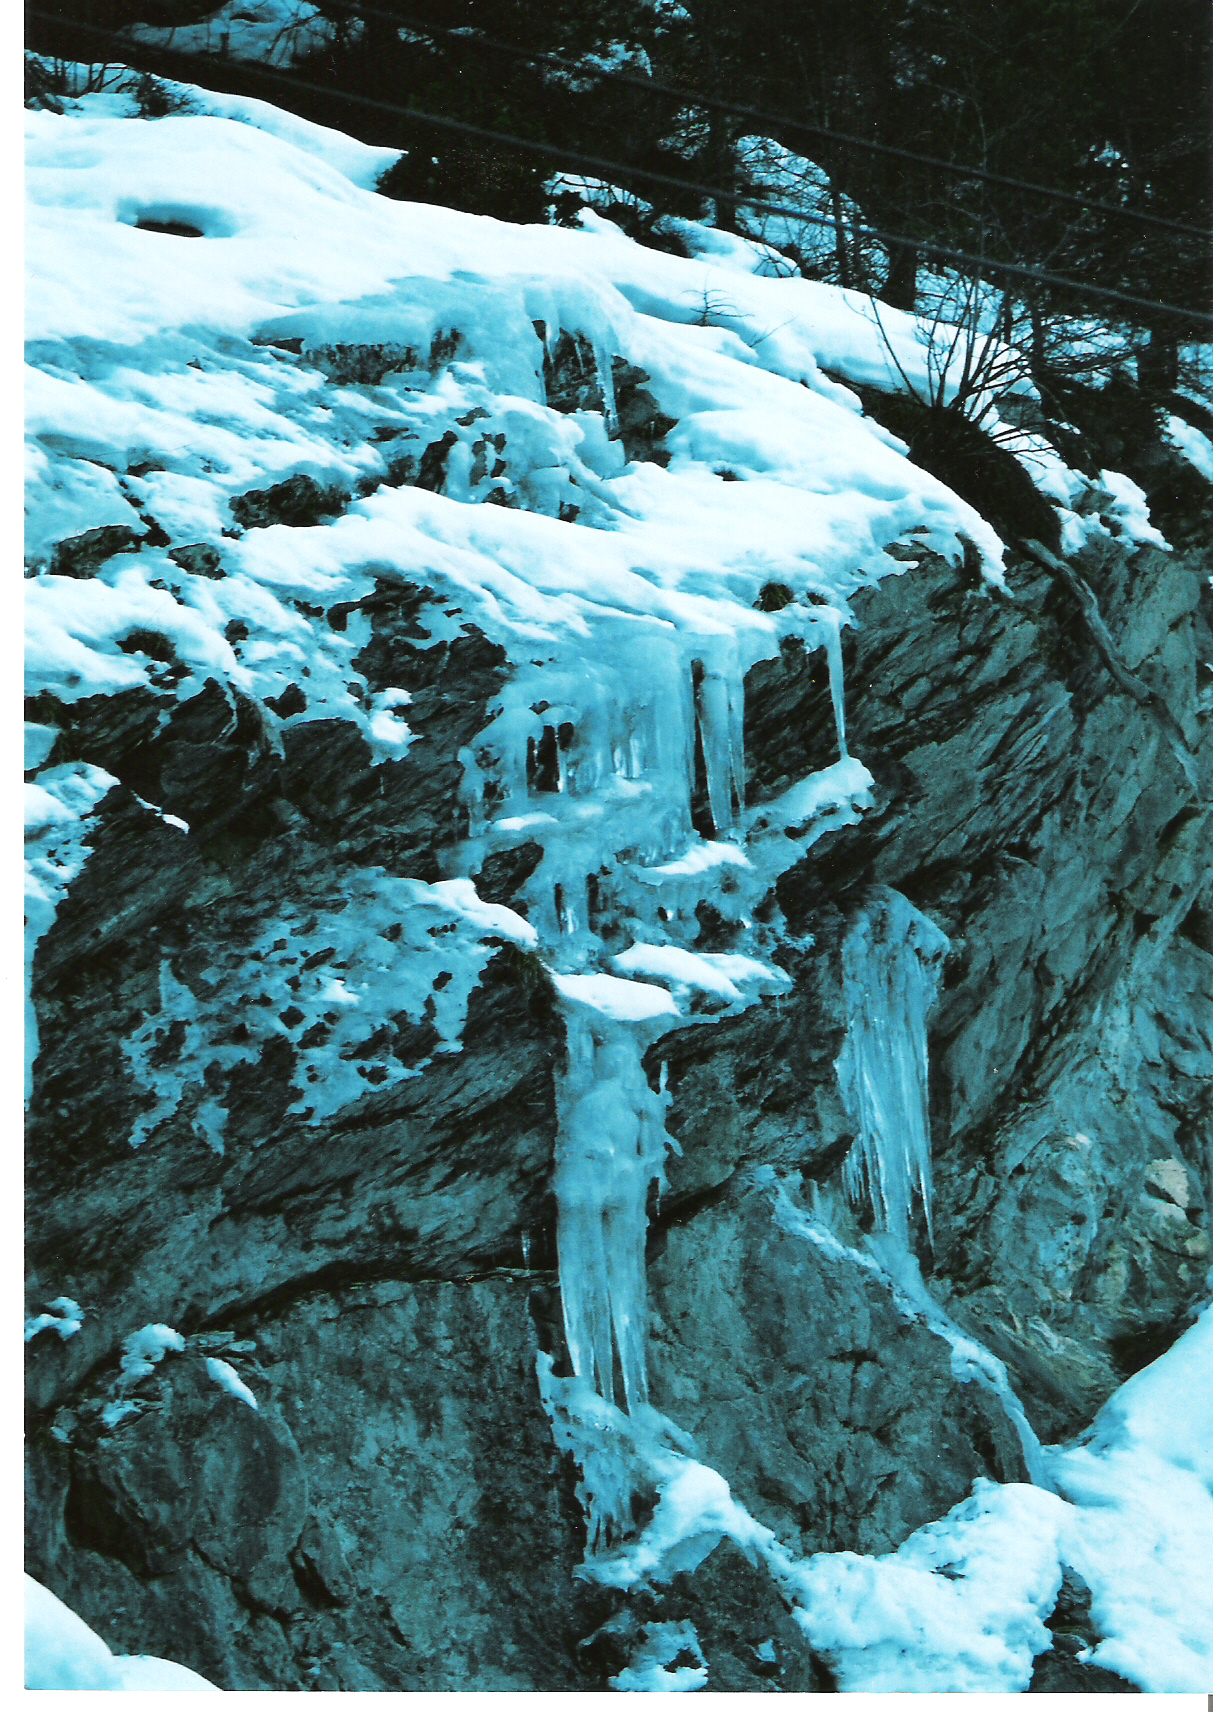 TE06-cascade-de-glace-de-chantal-chaume.jpg